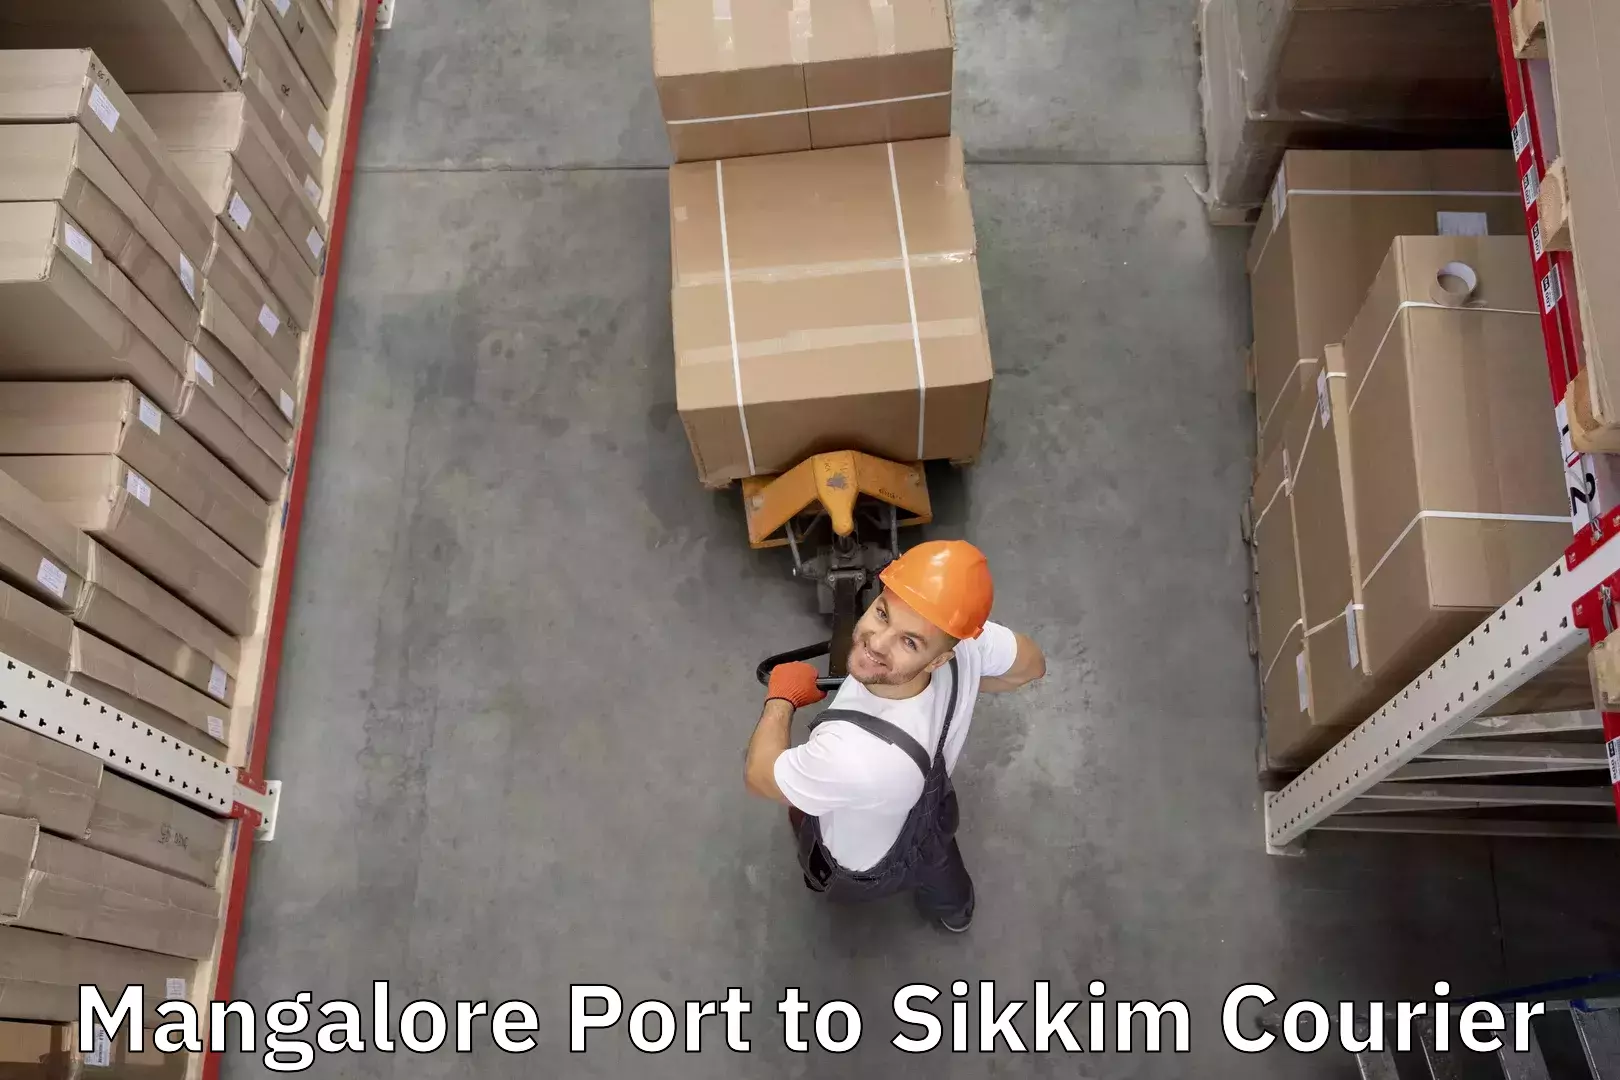 Baggage transport professionals Mangalore Port to North Sikkim